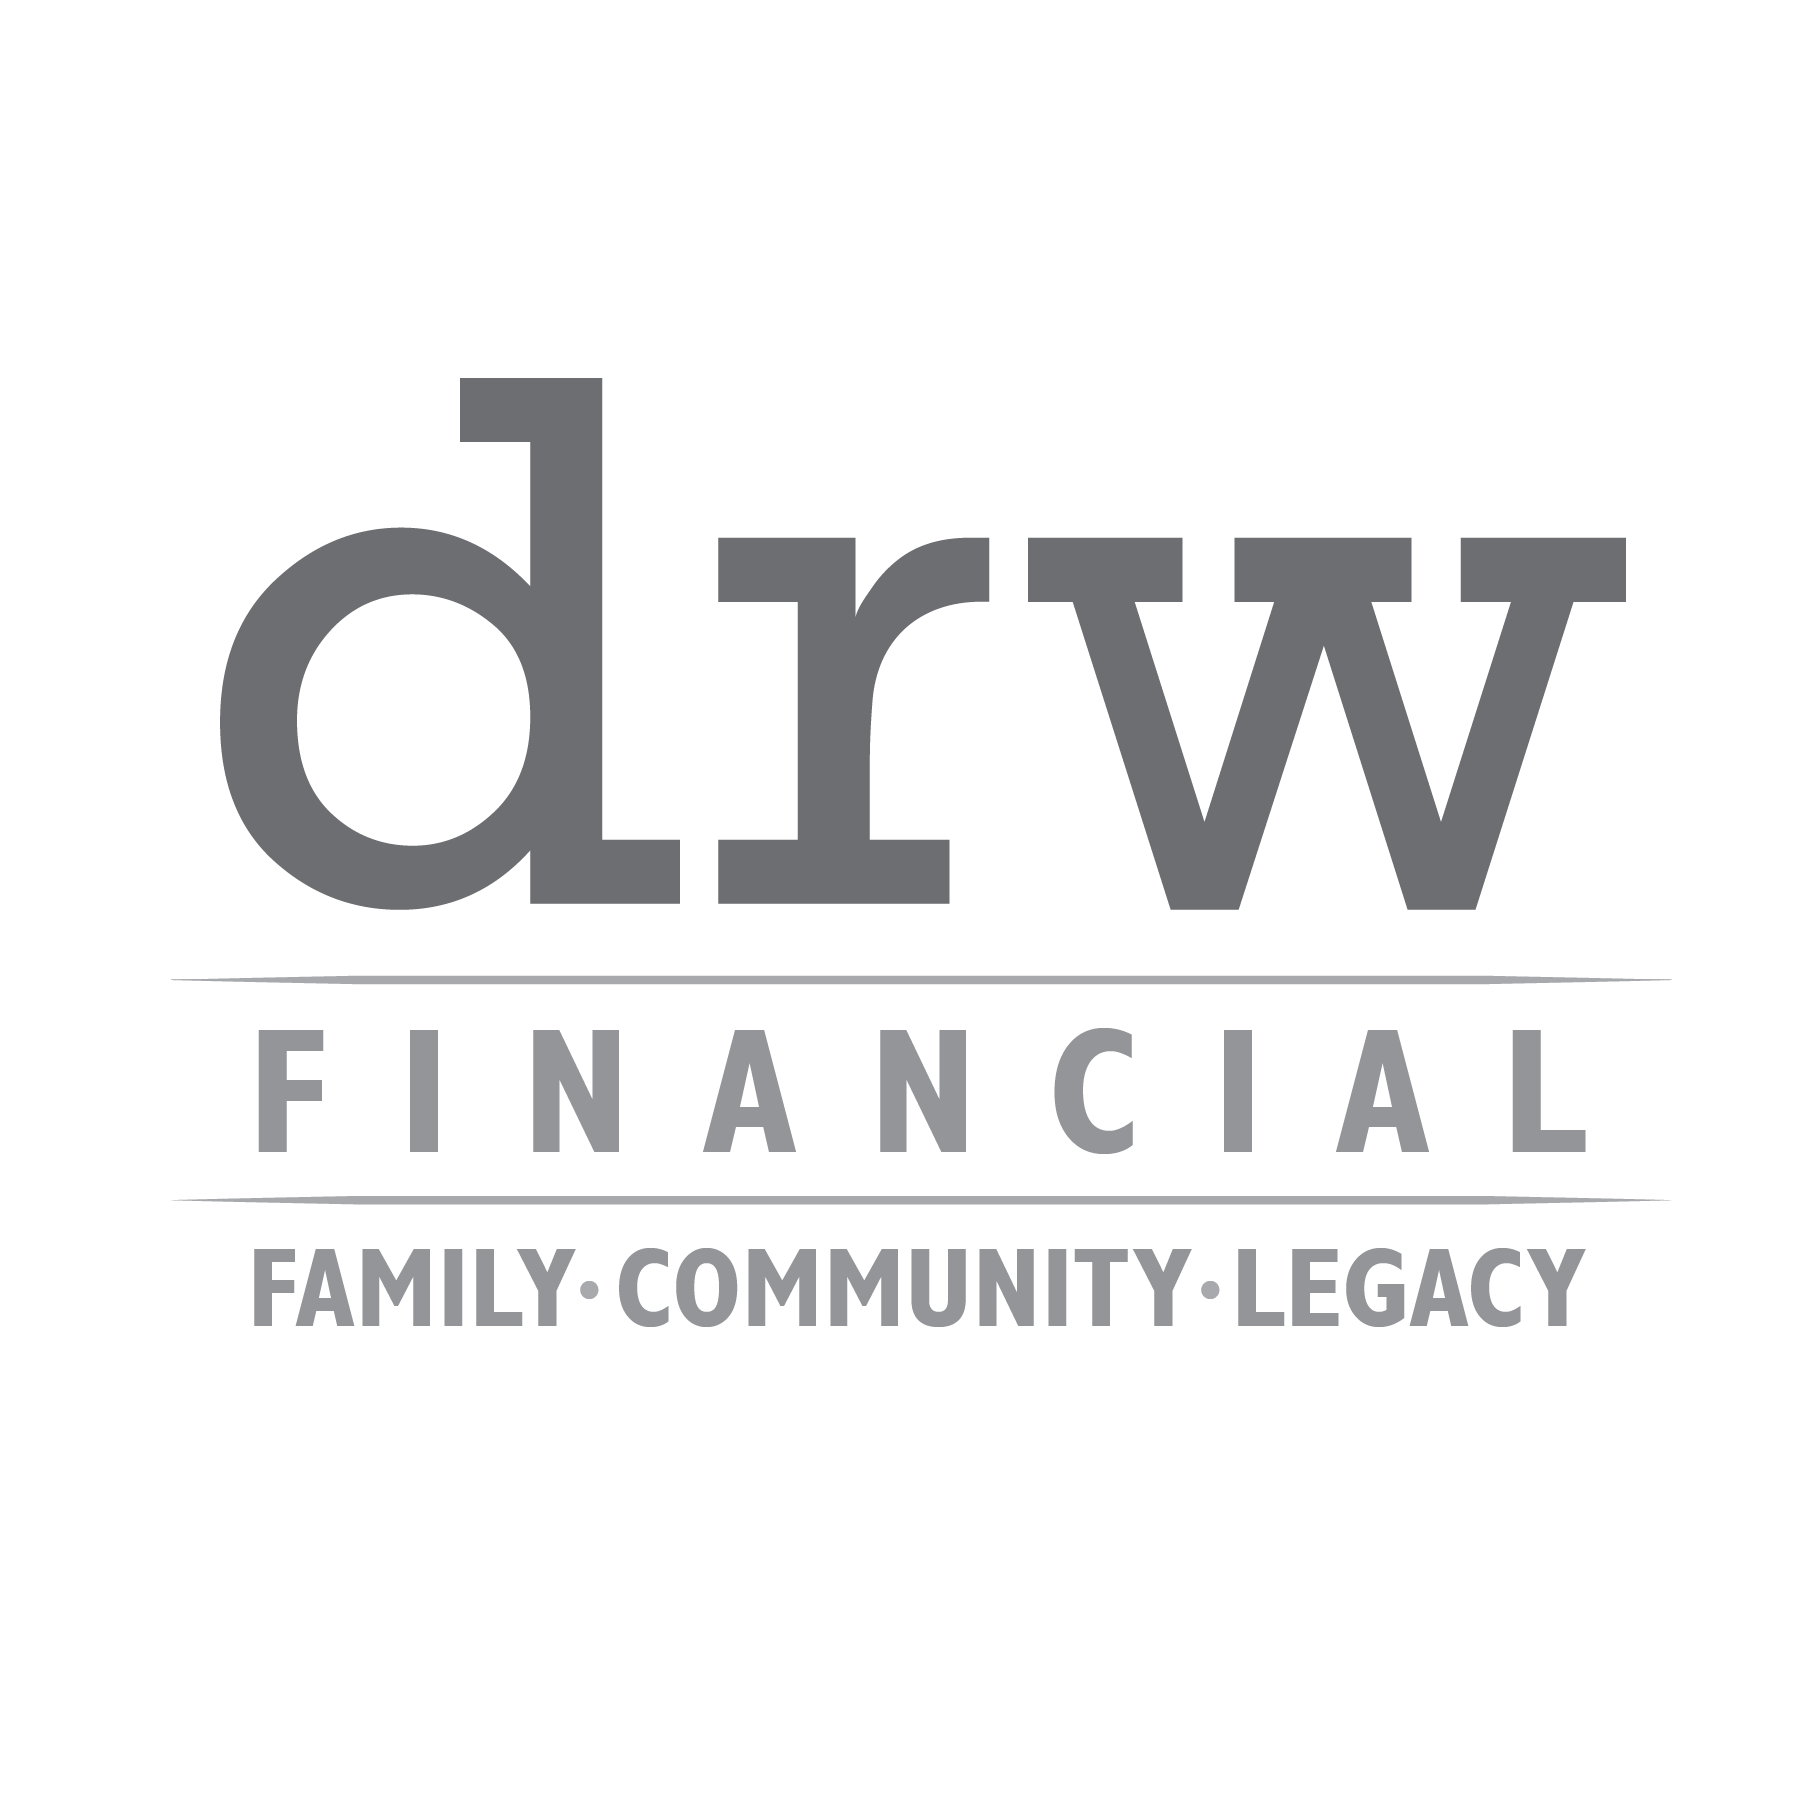 DRW Financial